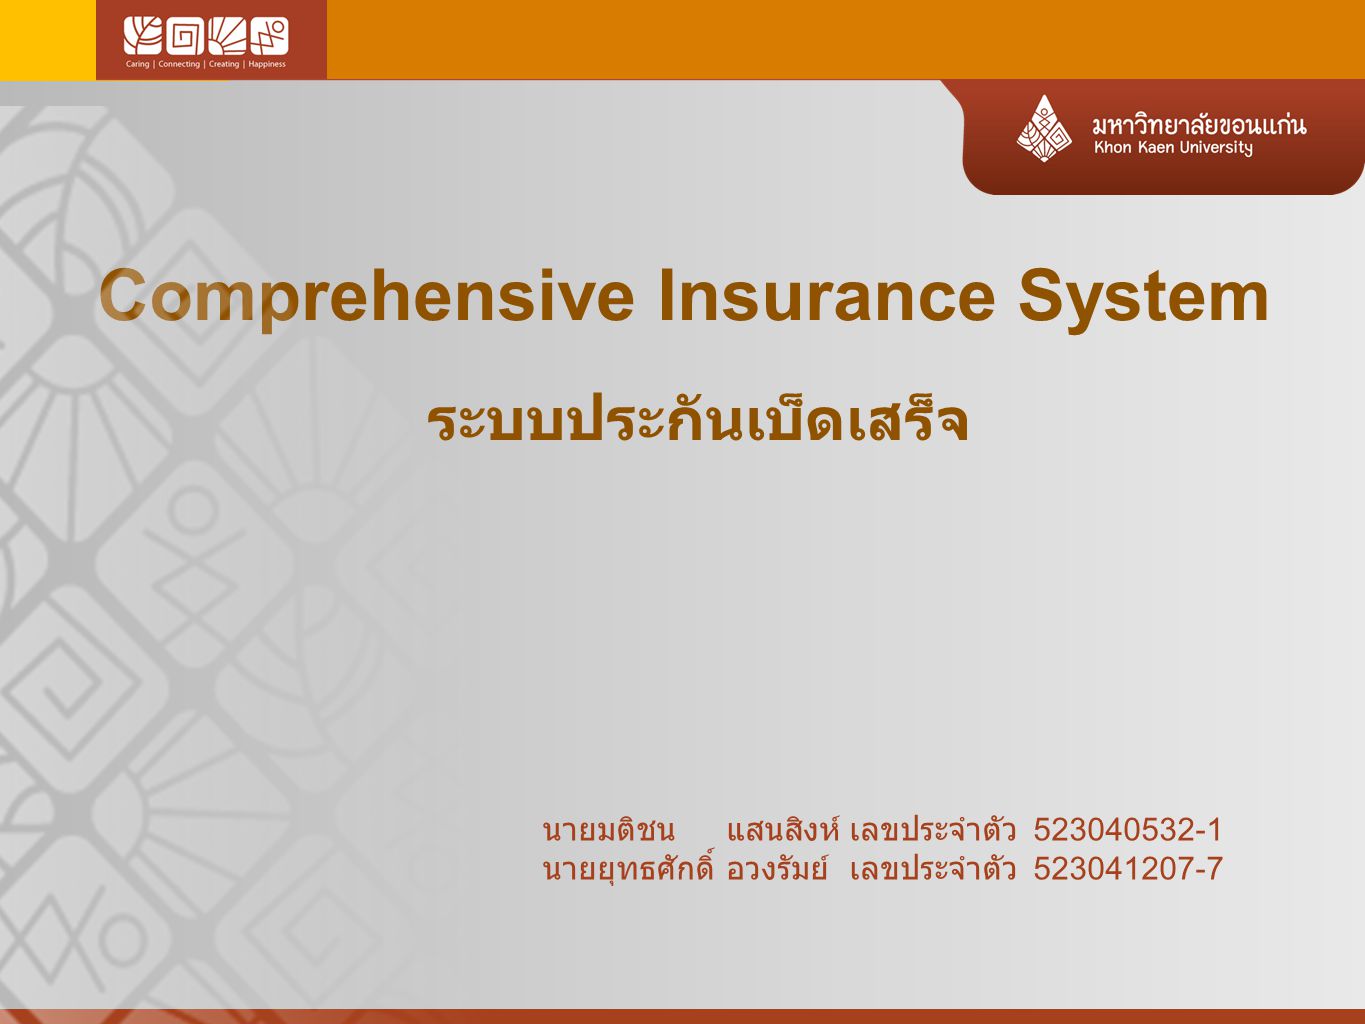 Comprehensive Insurance System ระบบประกันเบ็ดเสร็จ